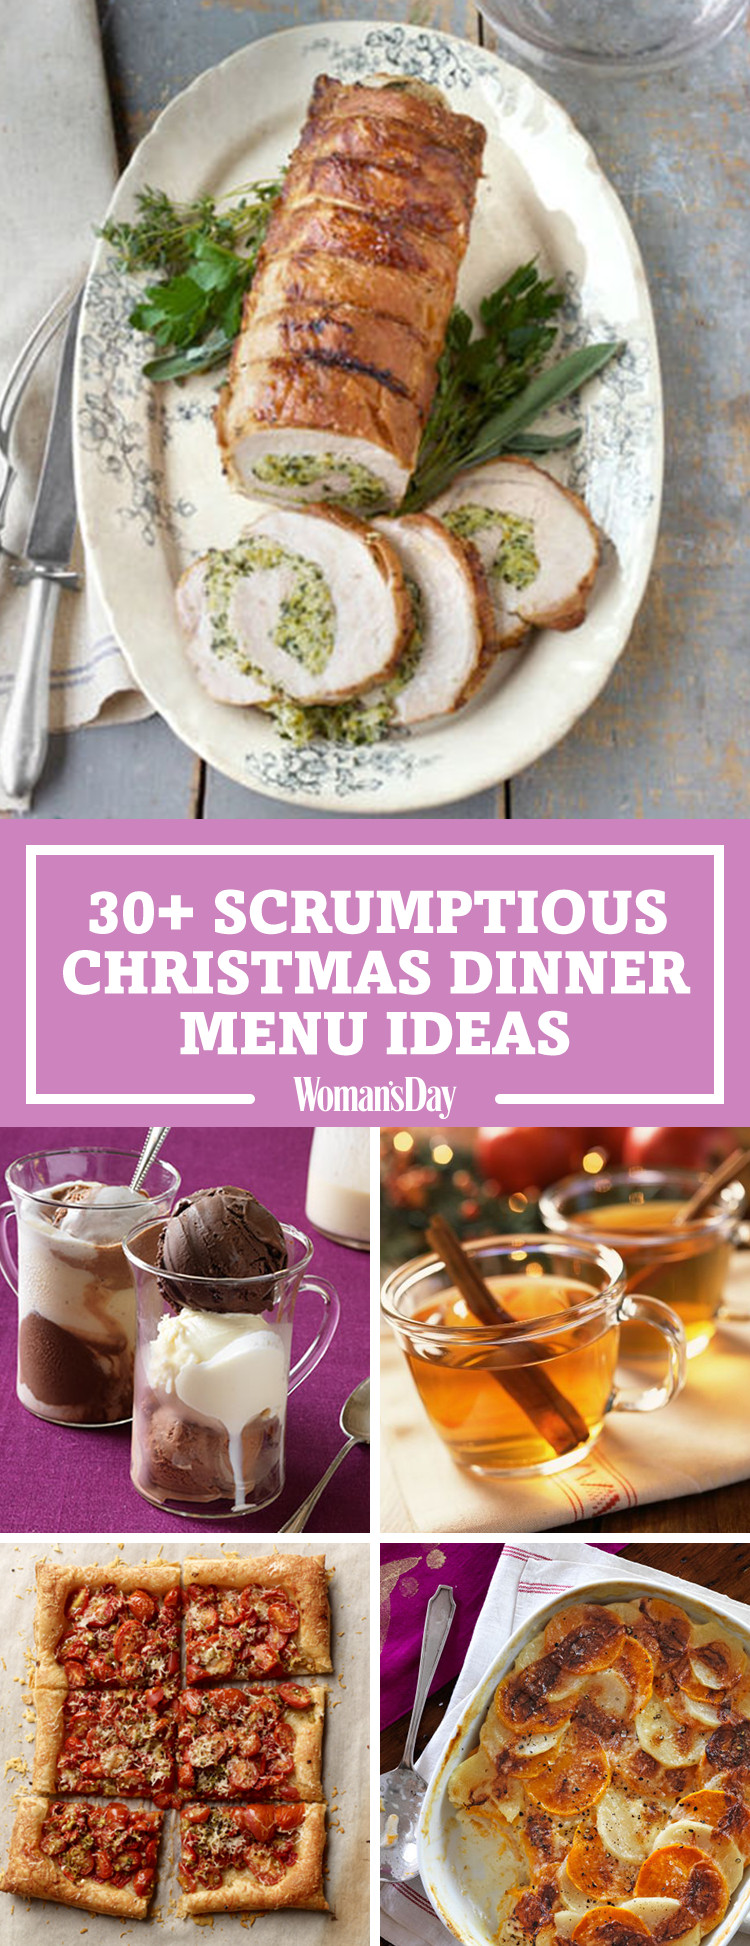 Christmas Recipes Dinner
 Best Christmas Dinner Menu Ideas for 2017